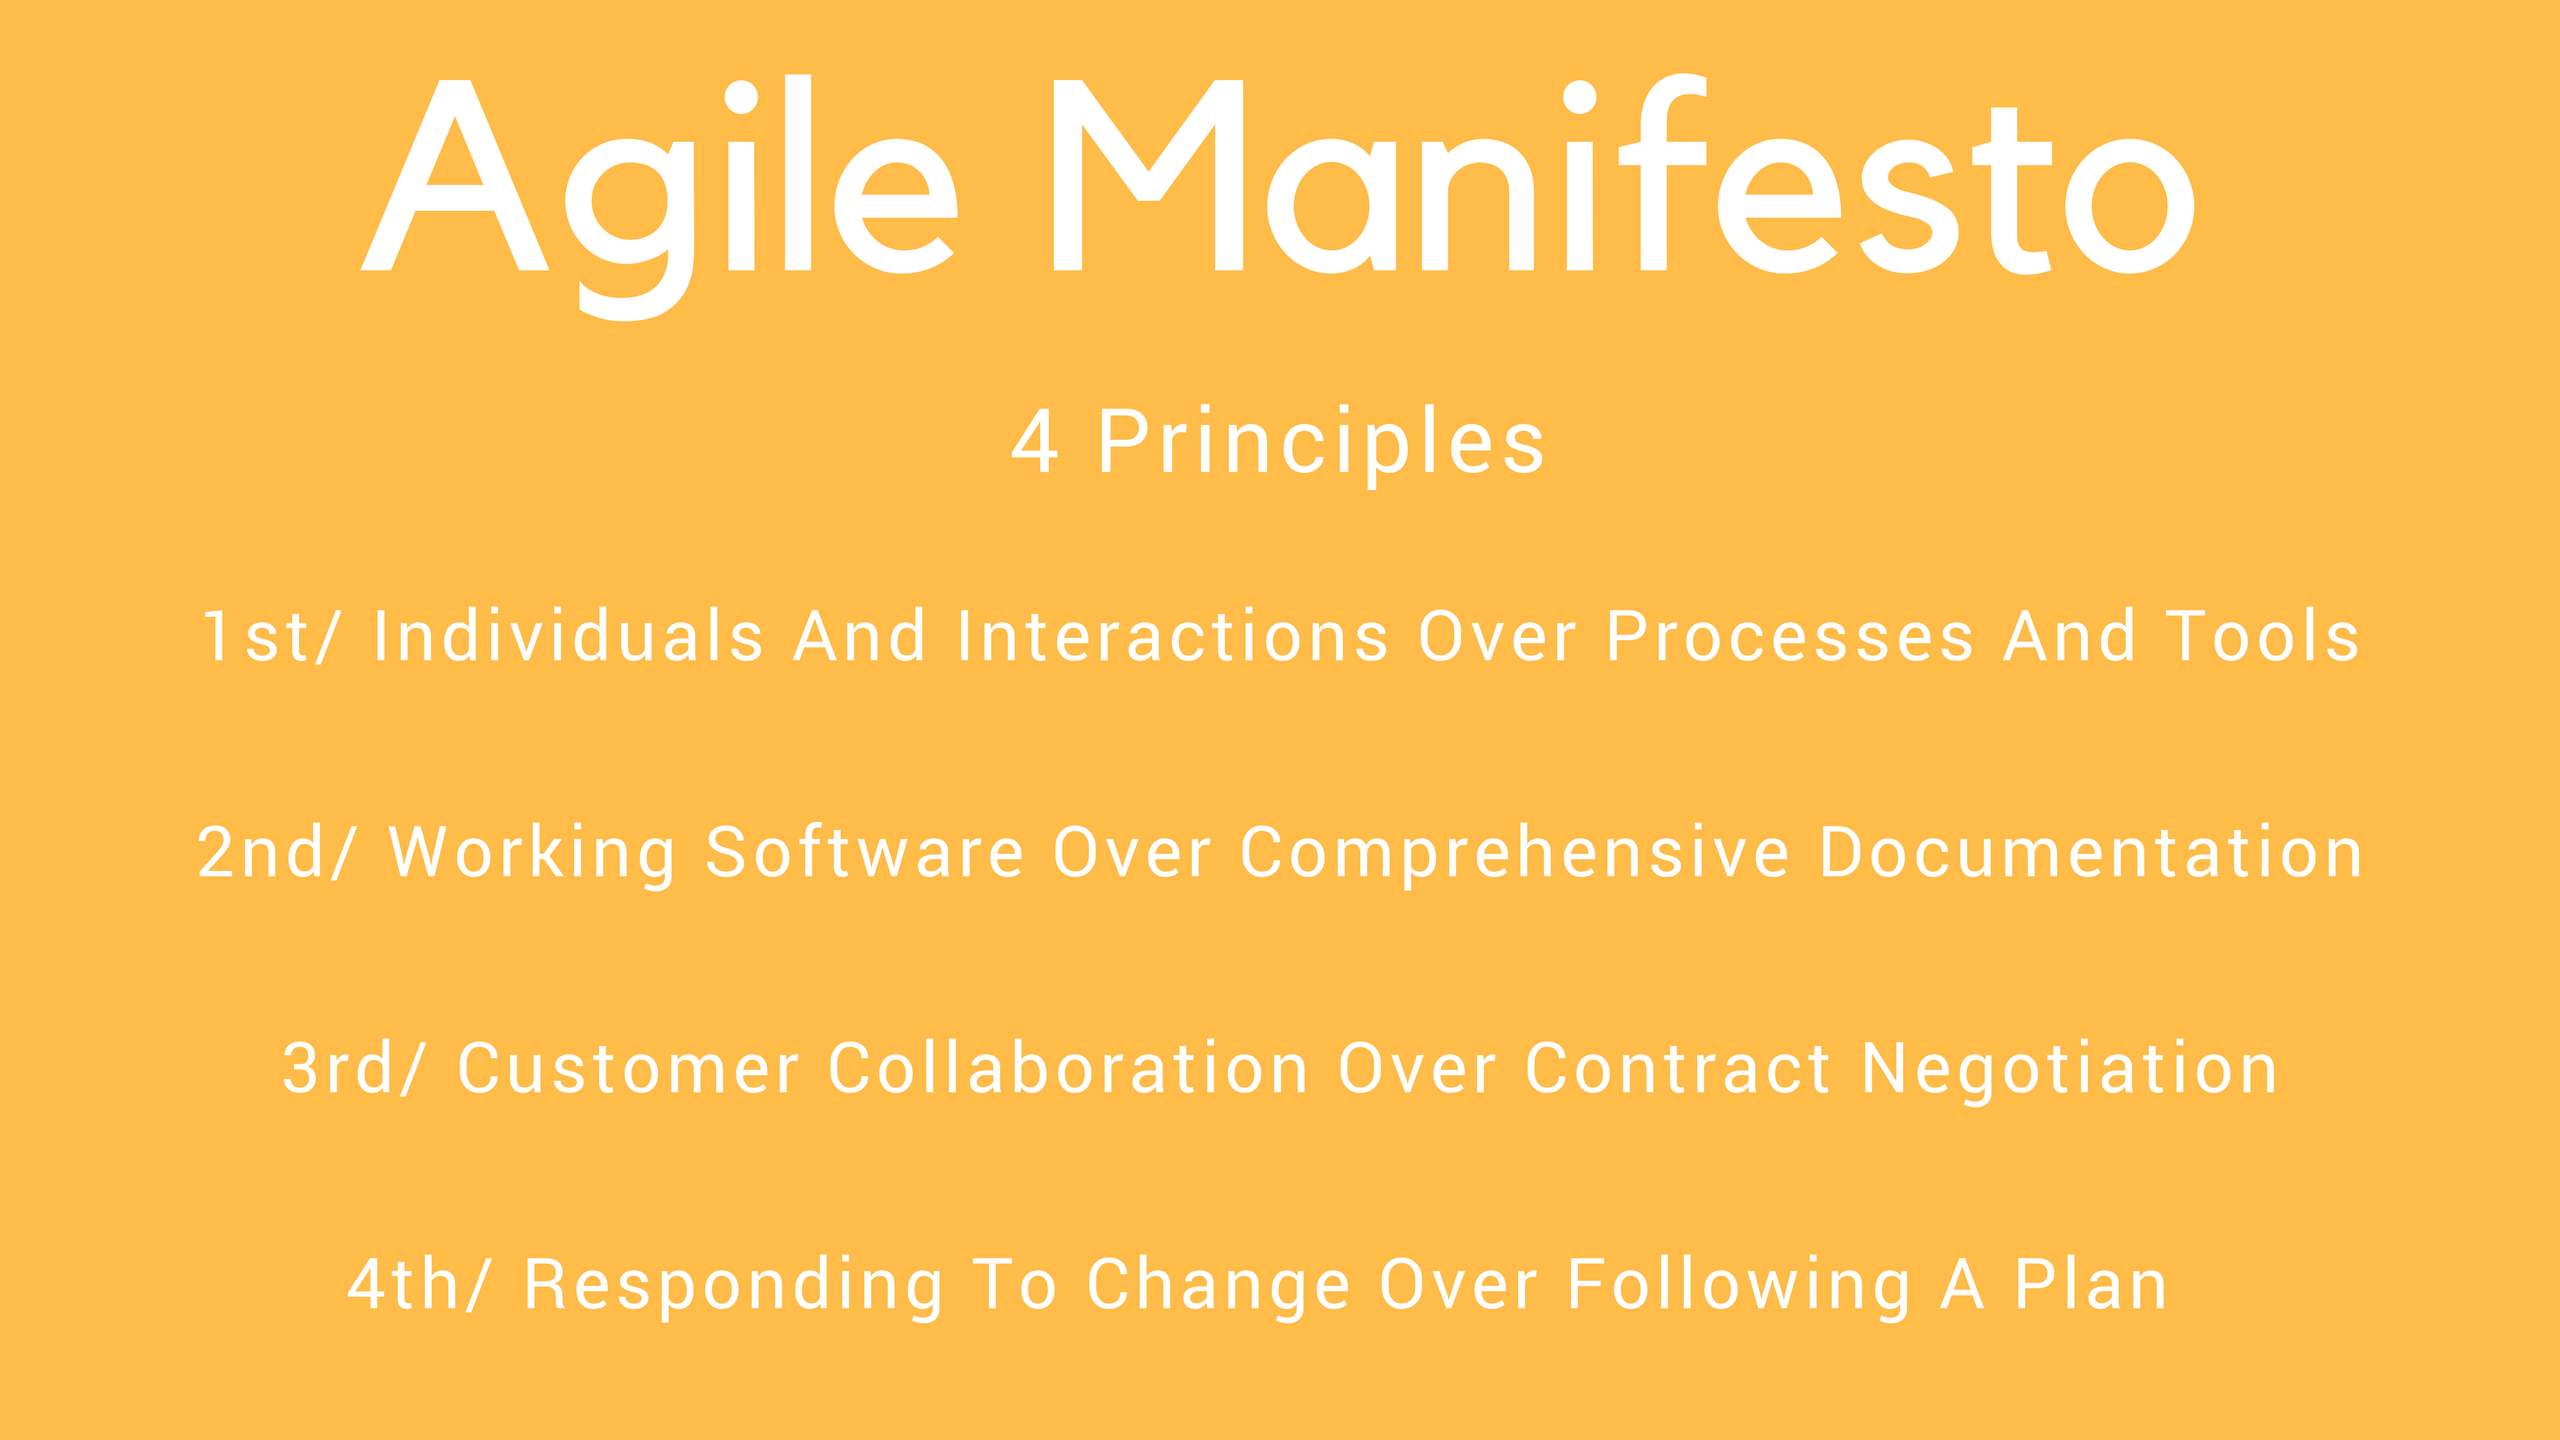 Agile Manifesto explanation